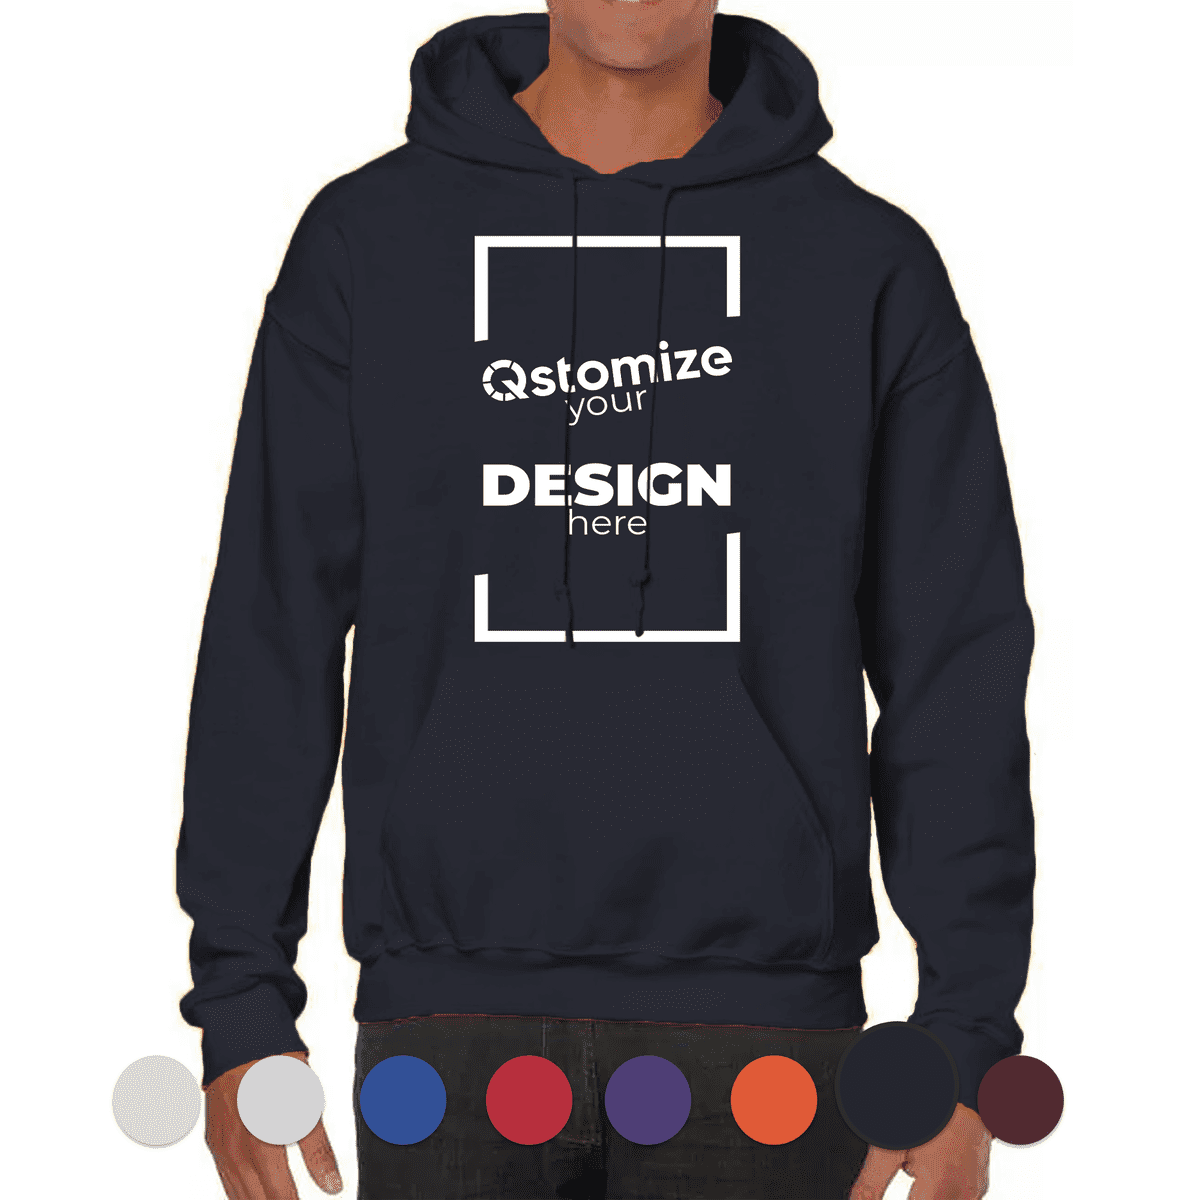 Custom Sweatshirts, GILDAN Blend Hooded Sweatshirt